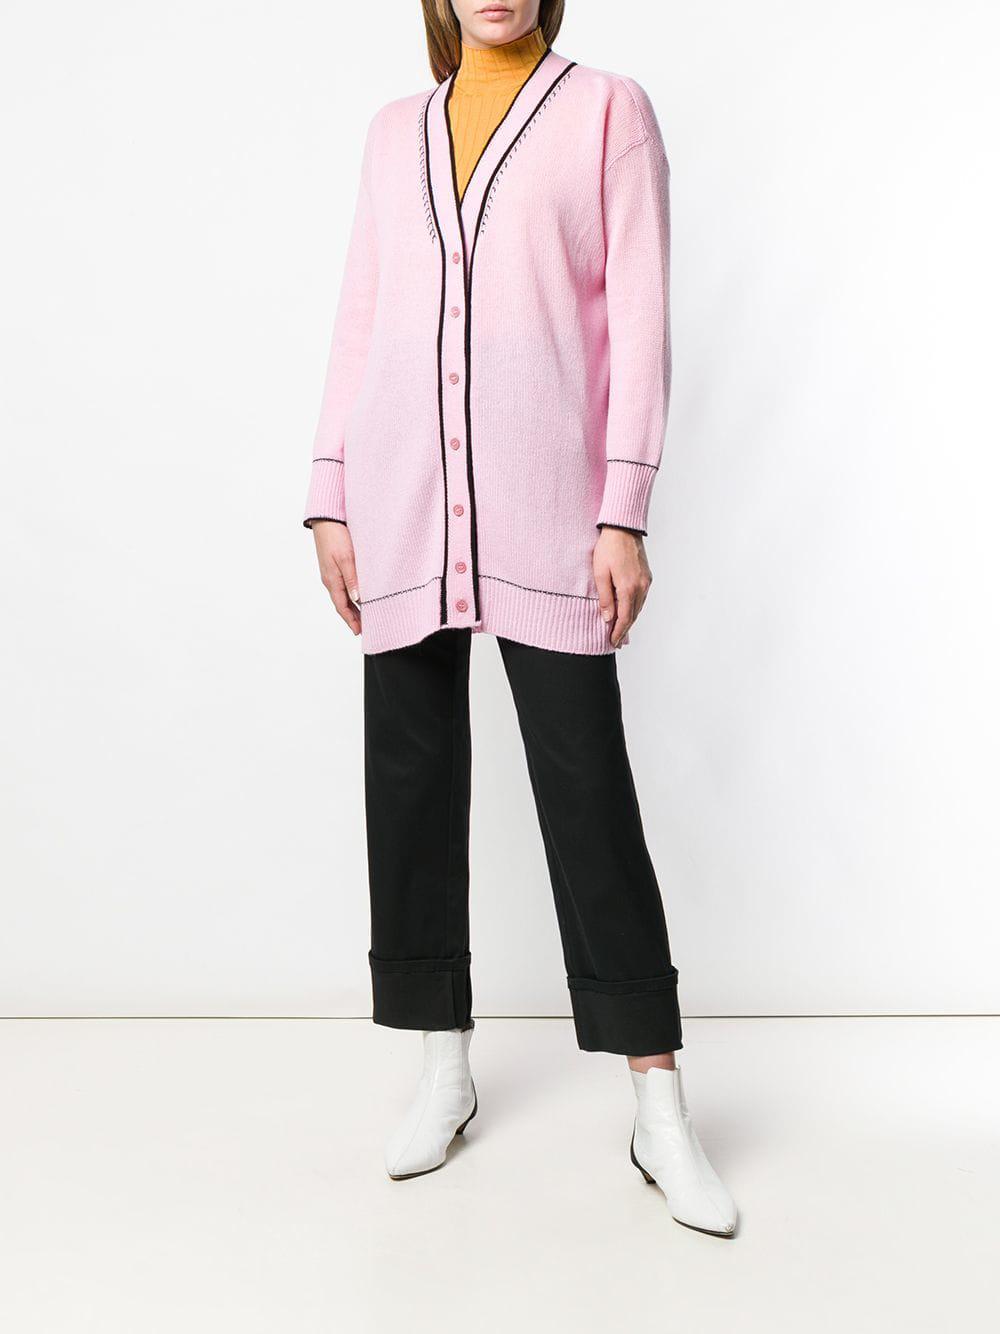 Marni Cashmere Contrast Trim Cardigan in Pink - Lyst